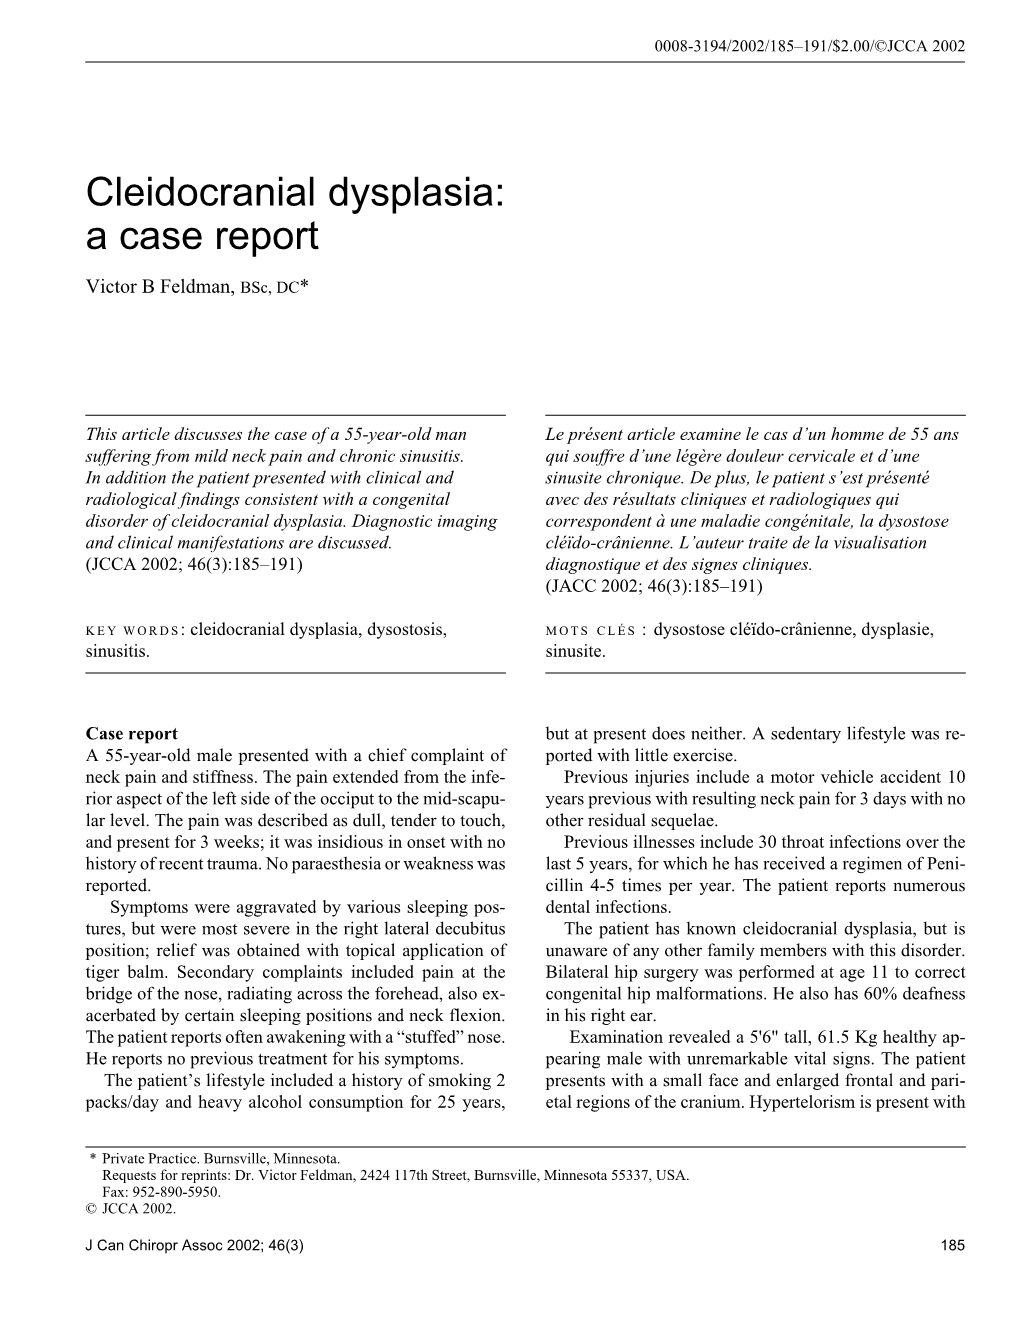 Cleidocranial Dysplasia: a Case Report